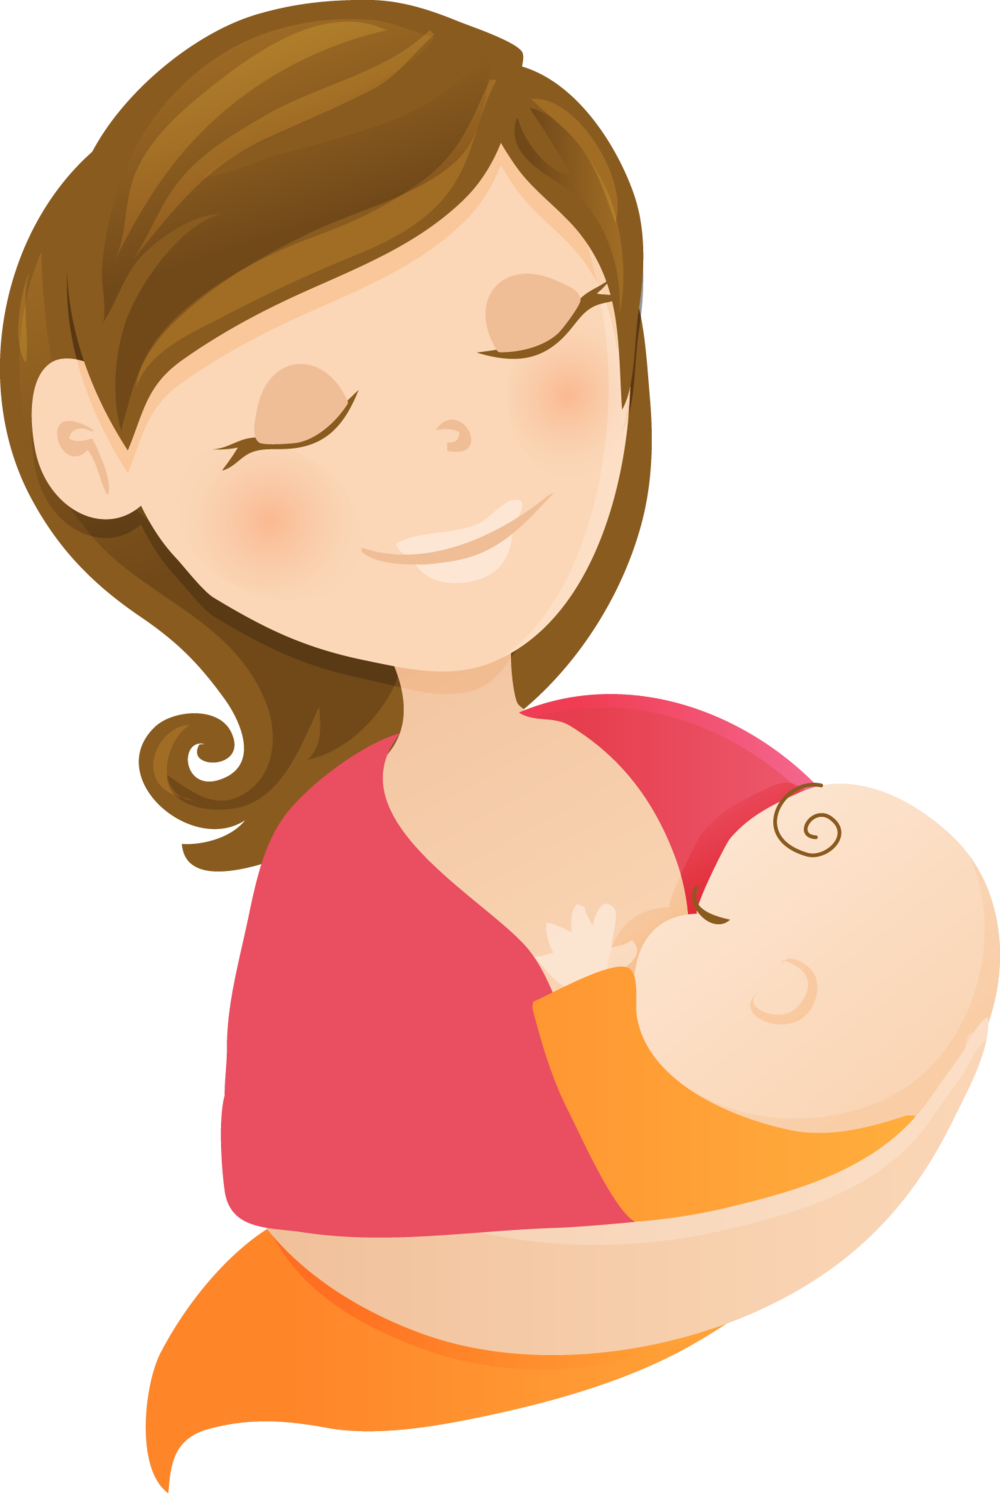 clip art of breastfeeding mother - photo #13